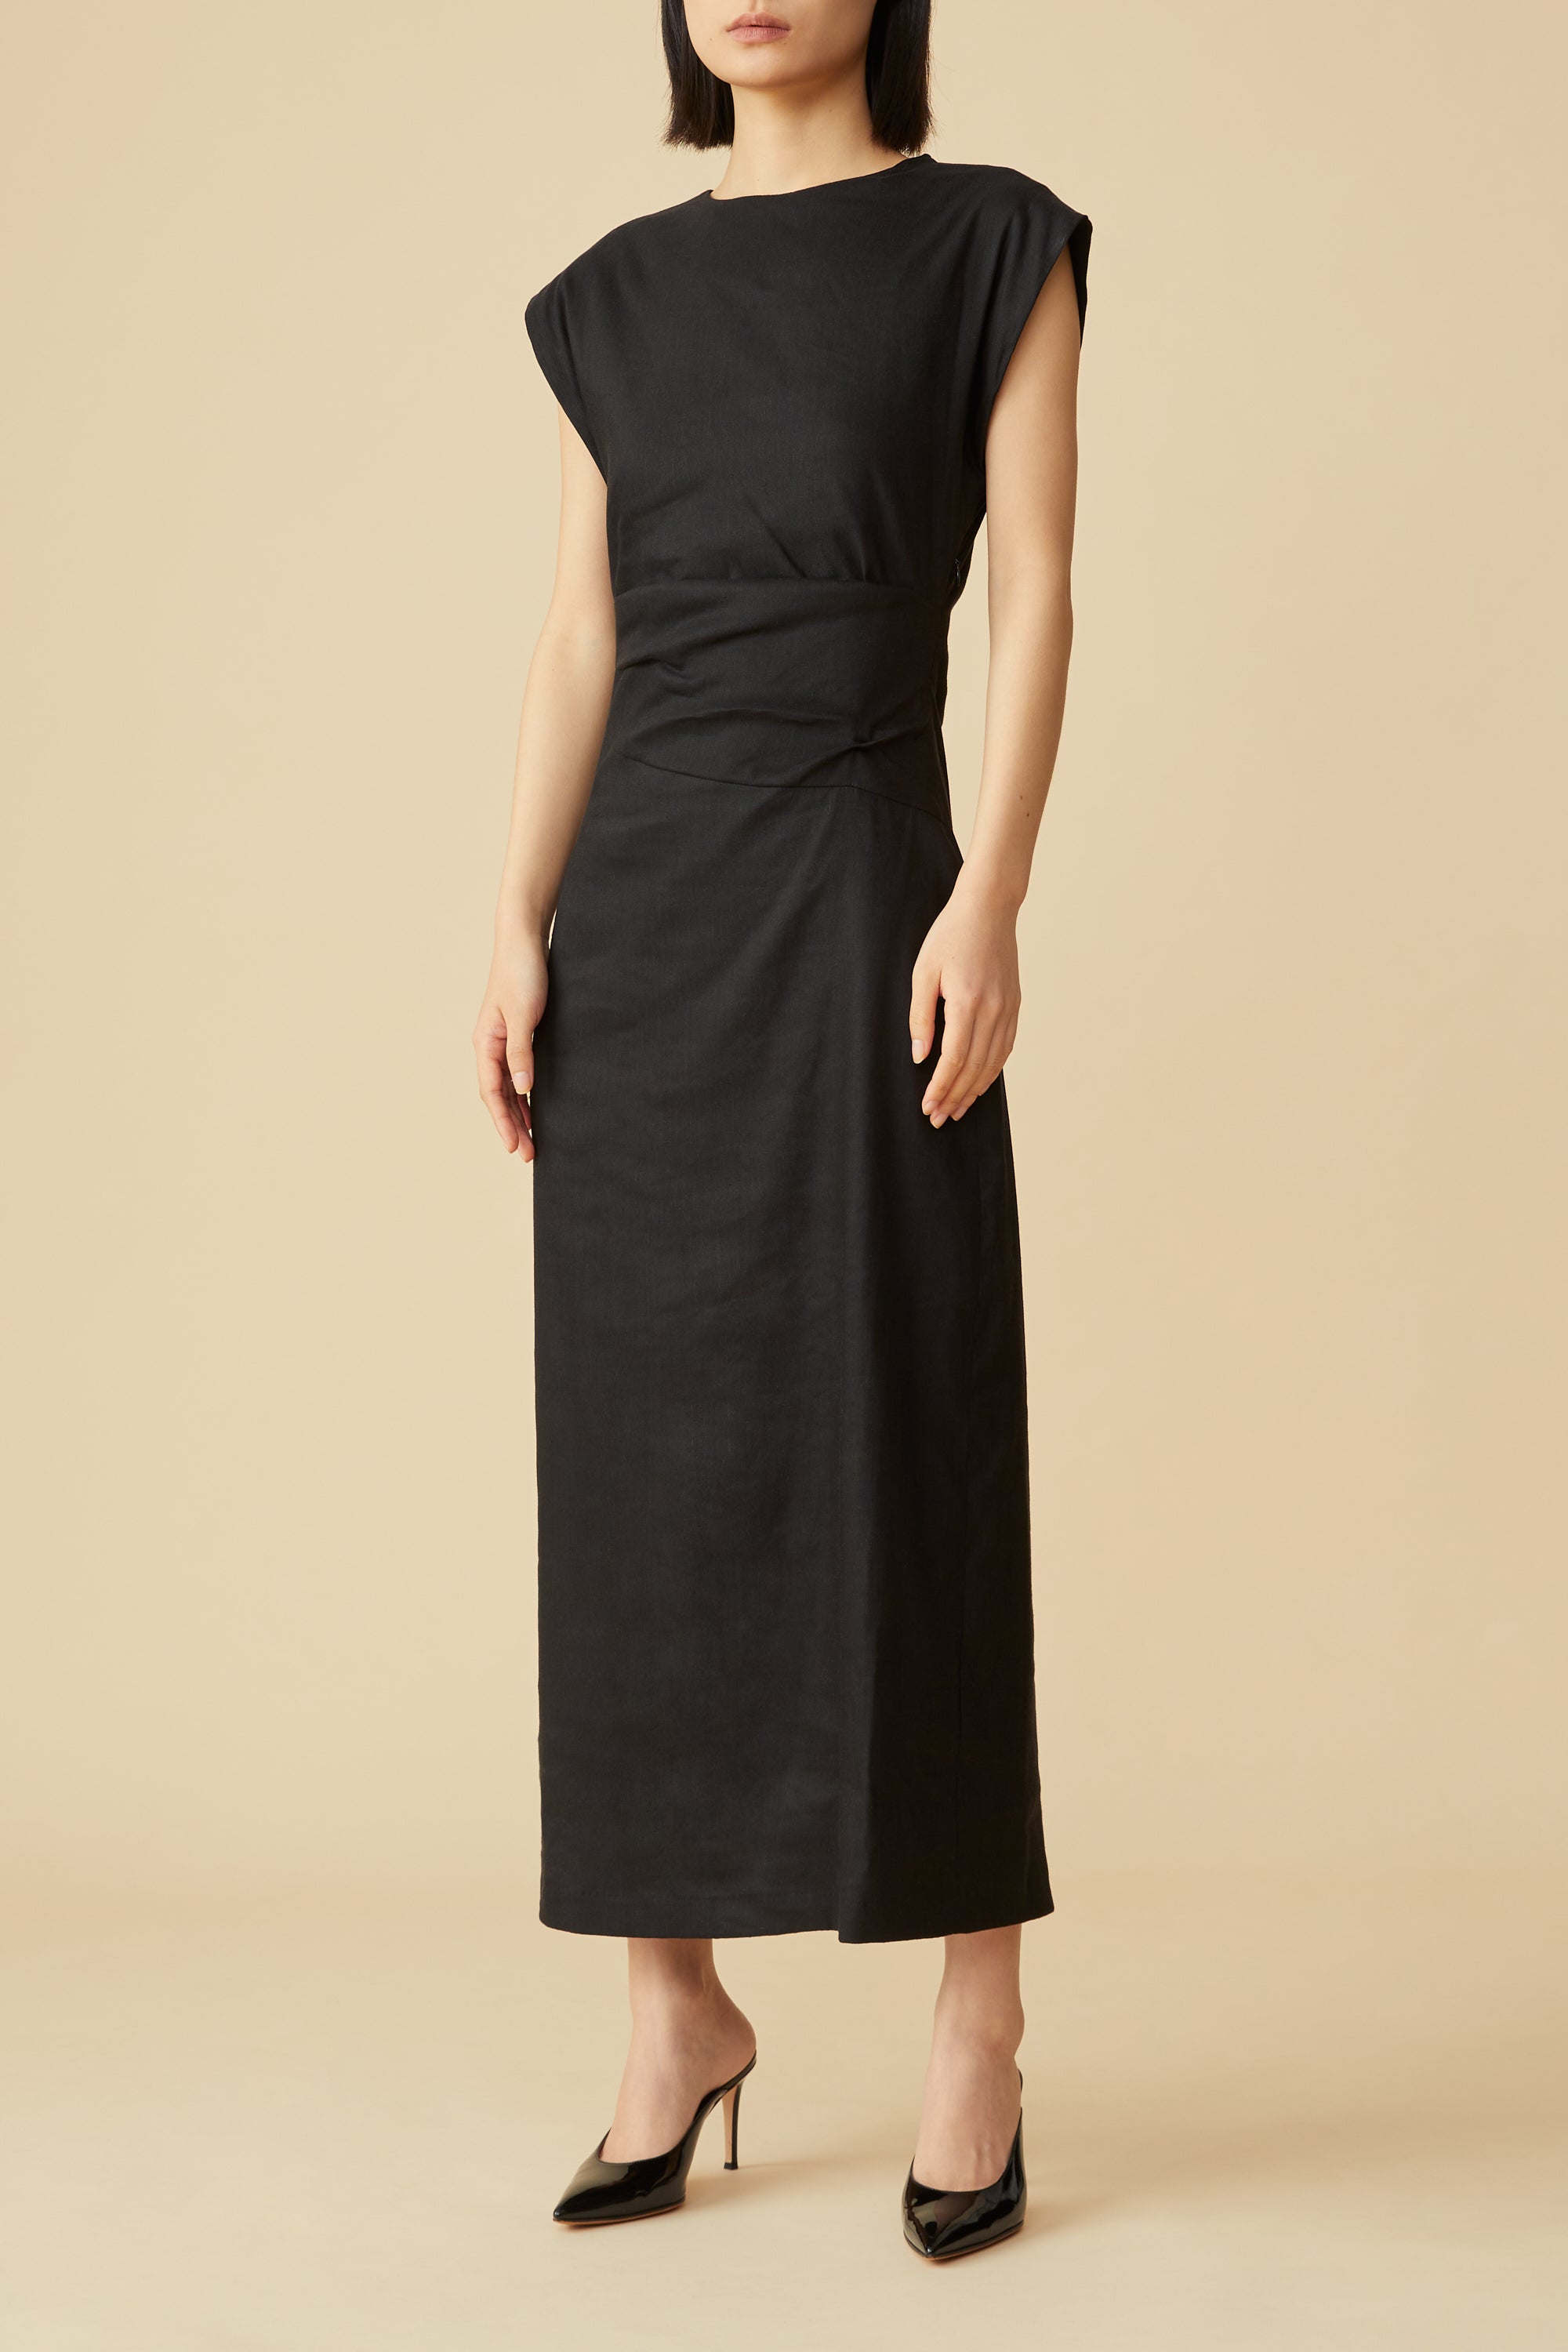 Lonoco's Gianna Linen Midi Dress in Black